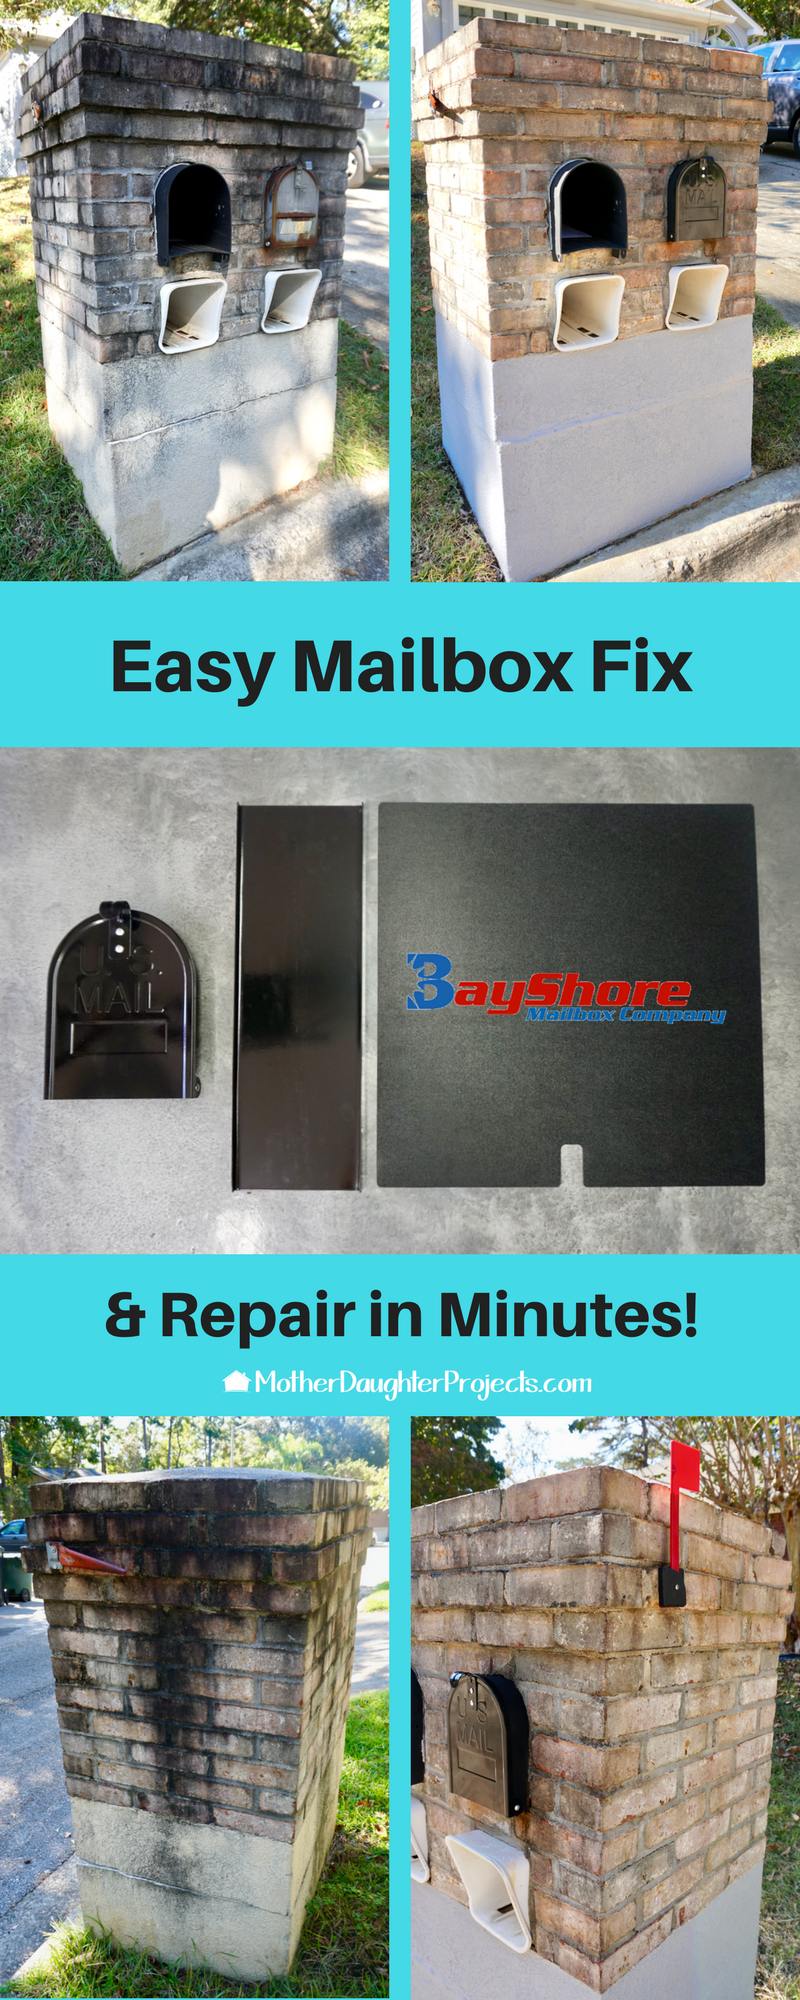 mailbox broken fix door brick repair metal bayshore replace retrofit diy projects own please